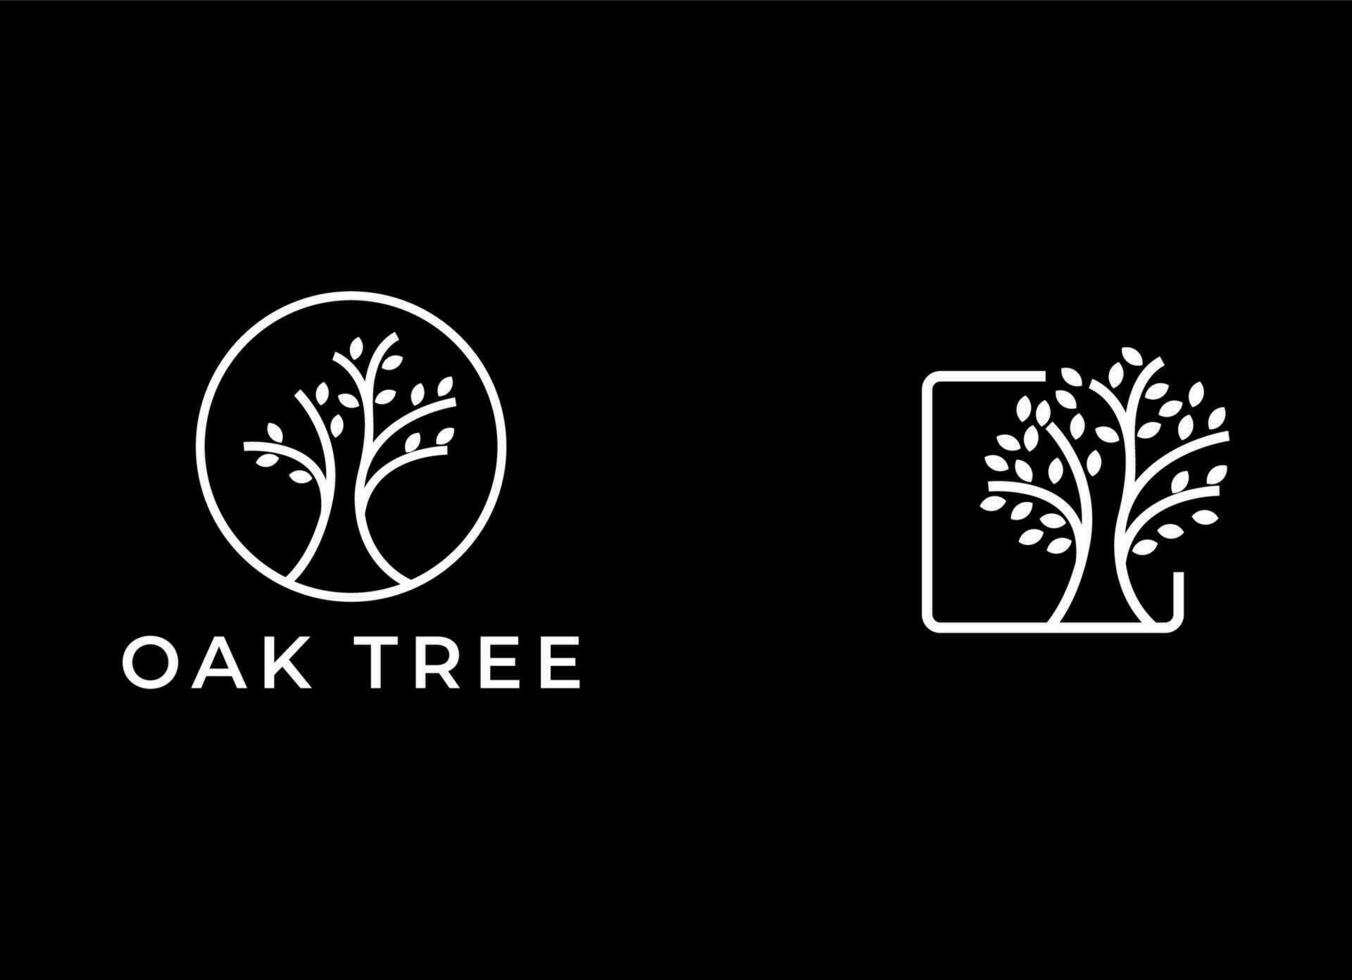 Nature trees minimalist vector illustration logo design